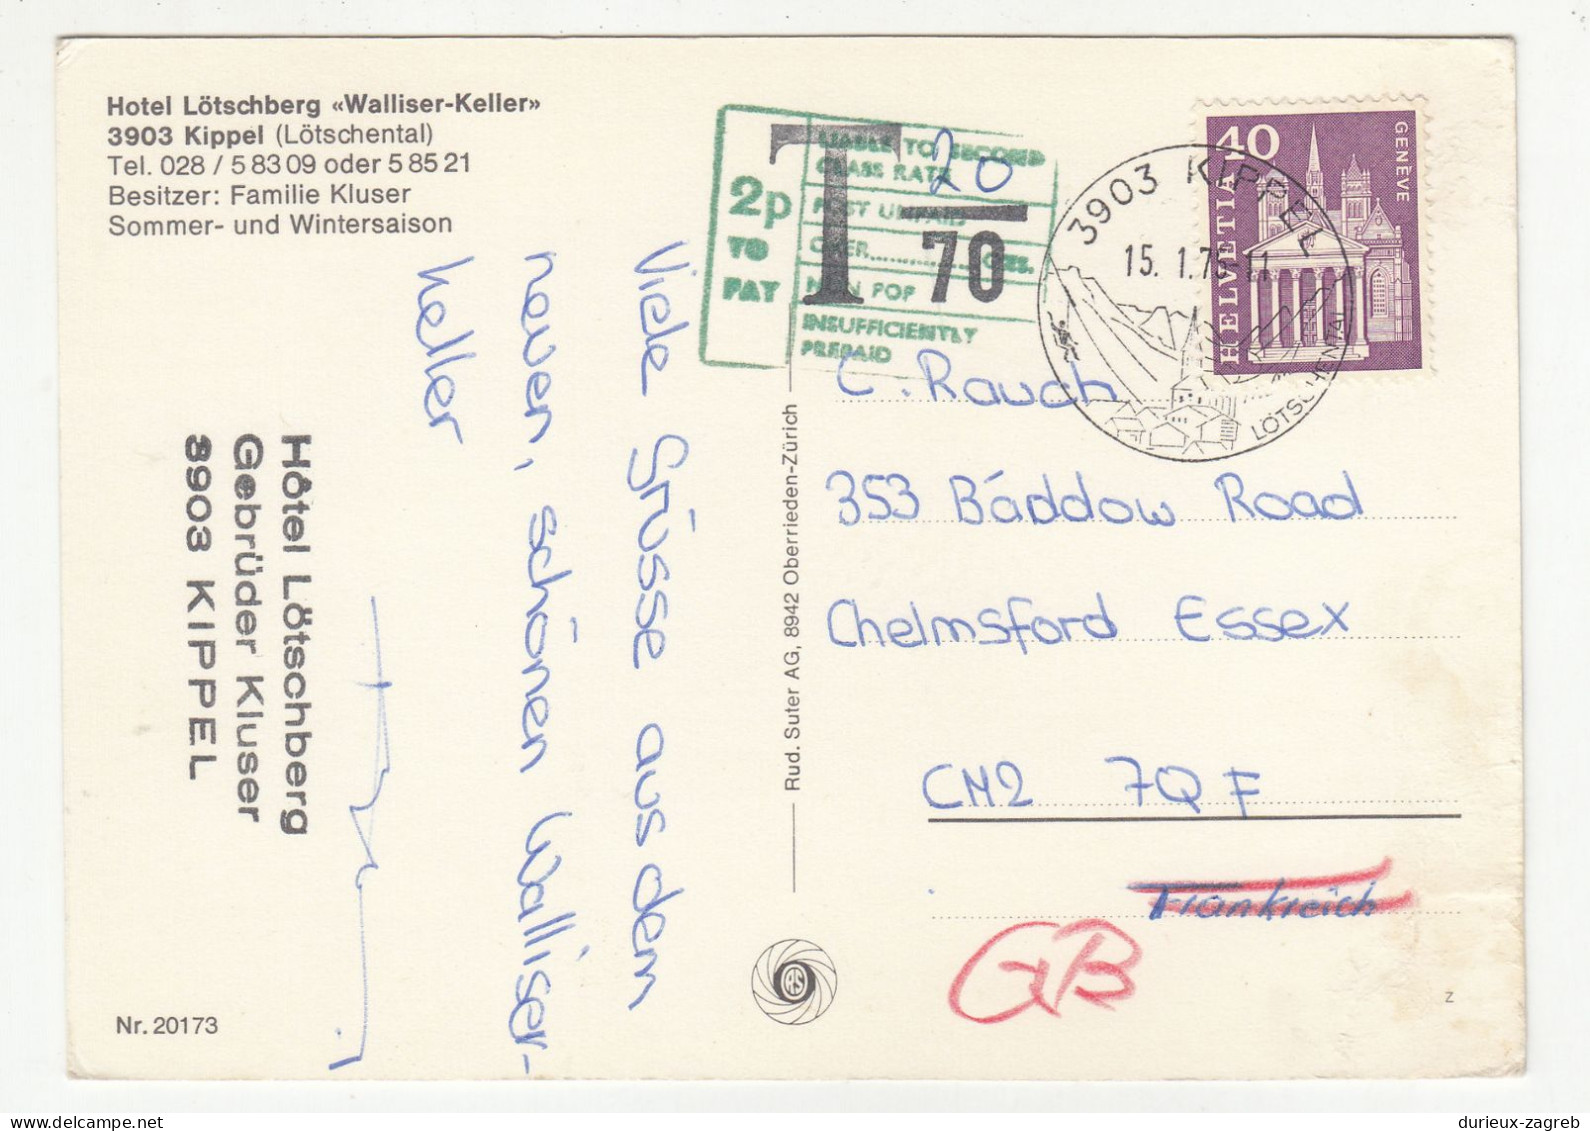 Switzerland Hotel Lötschberg "Walliser-Keller" Postcard Posted 1975 - Taxed Postage Due B240510 - Taxe